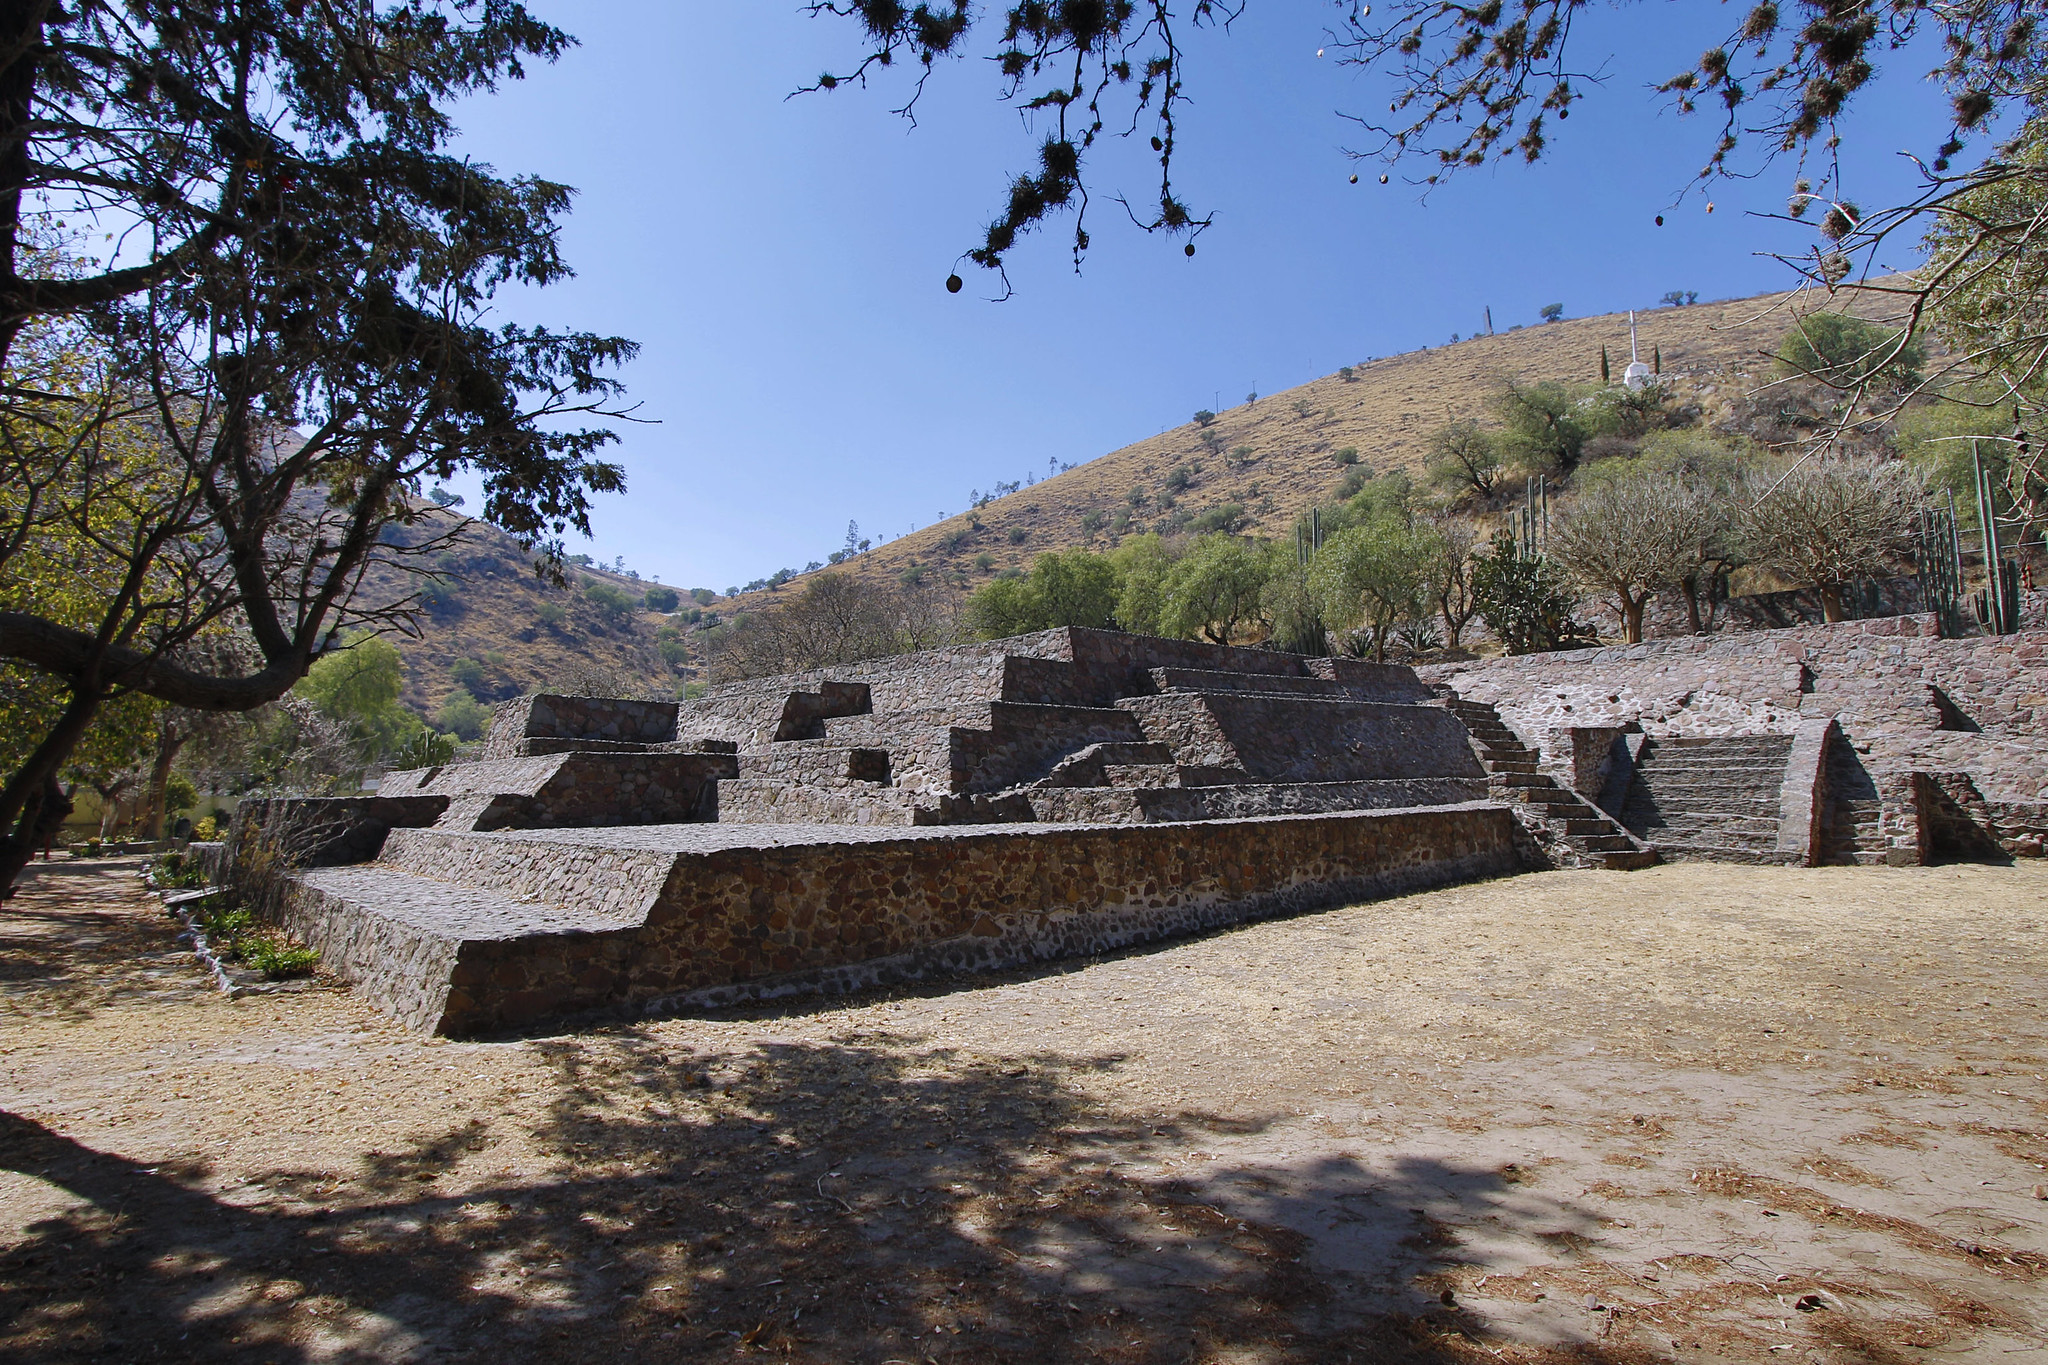 tlapacoya archaeological zone